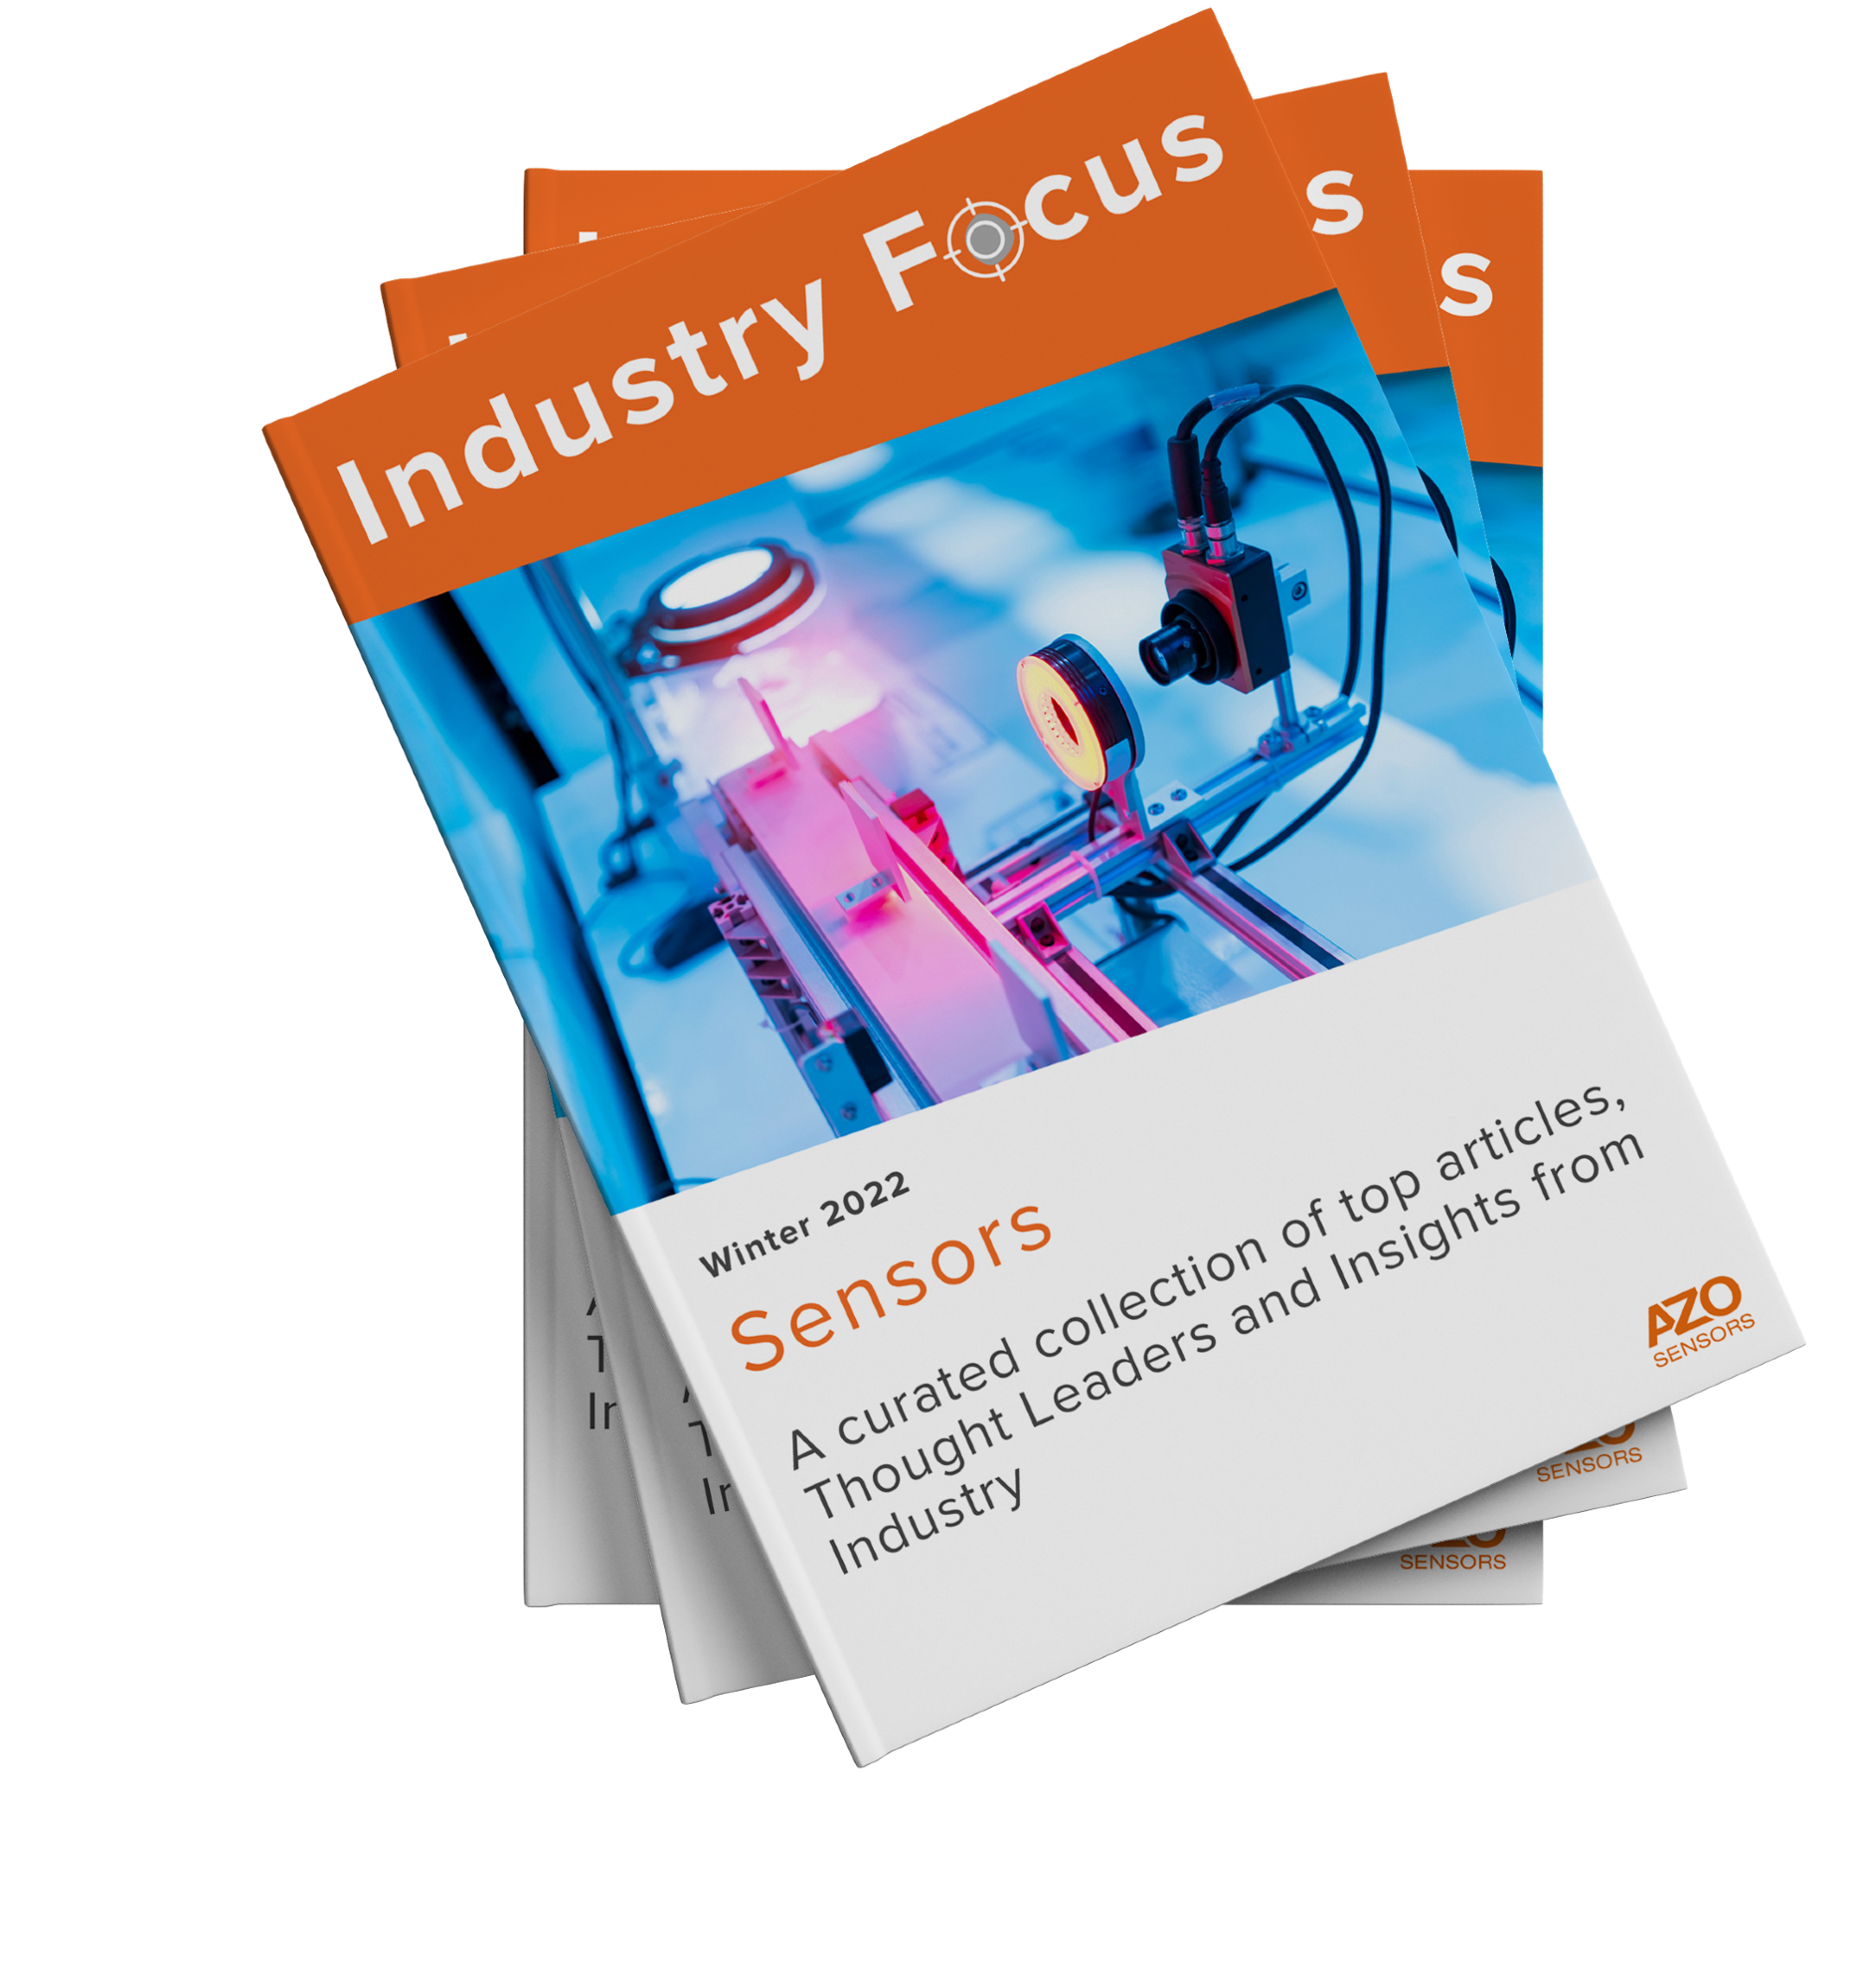 Sensors Industry Focus eBook